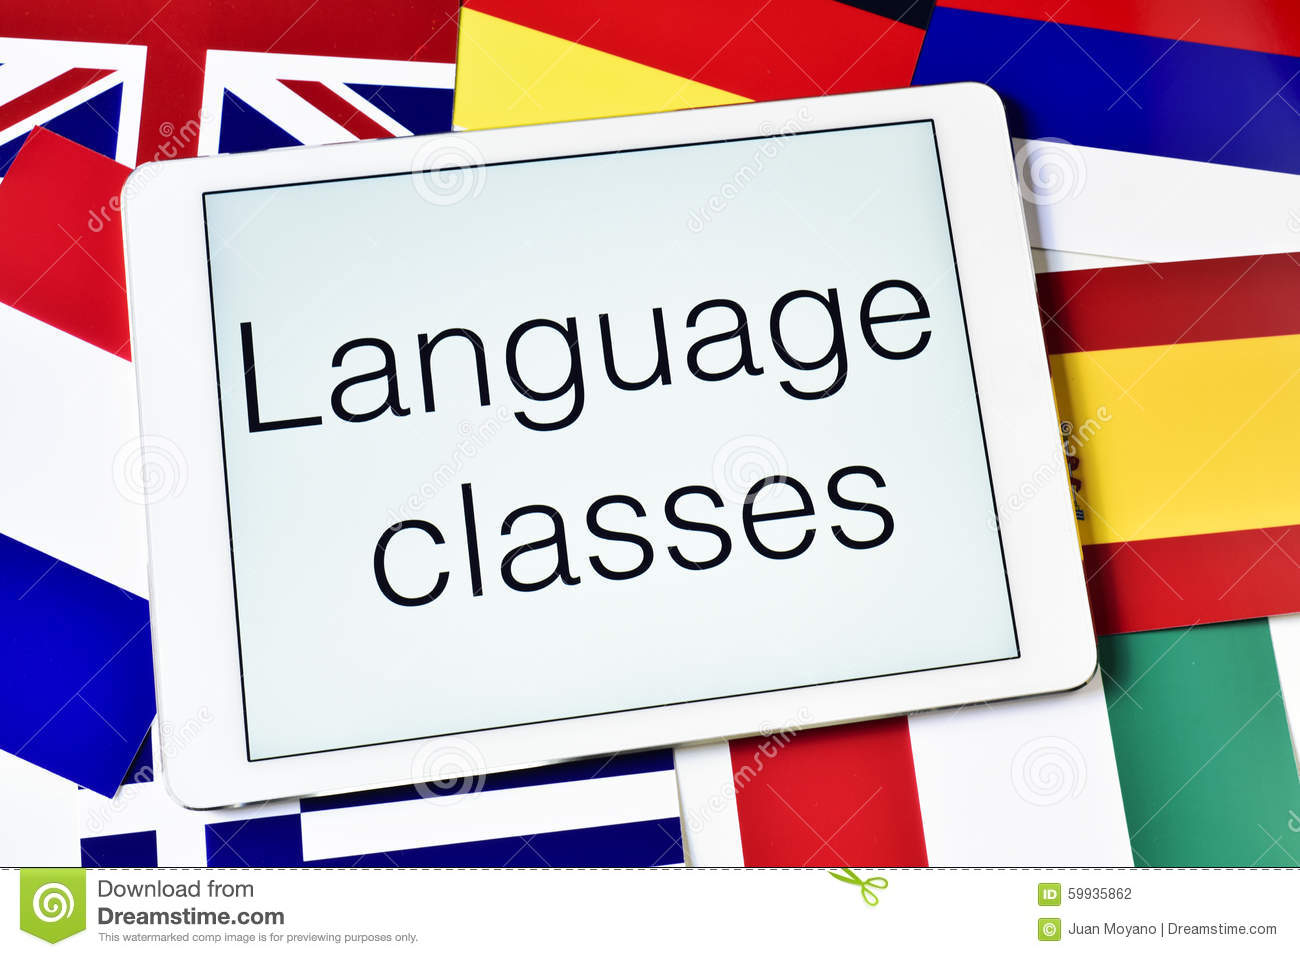 Mongolian Language Classes in Ghaziabad | Mongolian Language Course in Ghaziabad 